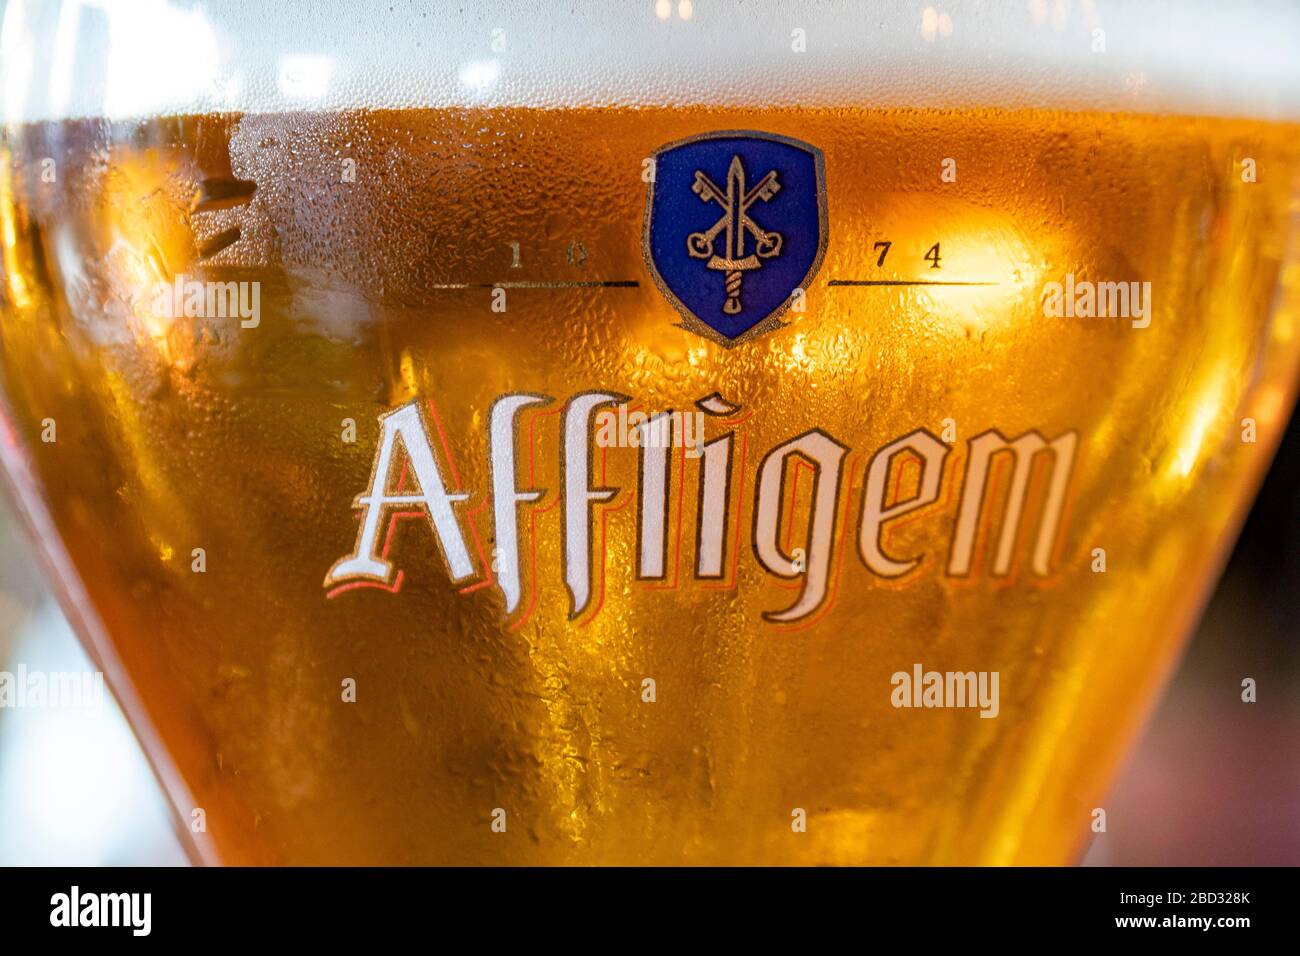 Affligem, cerveza de monasterio, cerveza belga de copa, Amsterdam, países Bajos Foto de stock